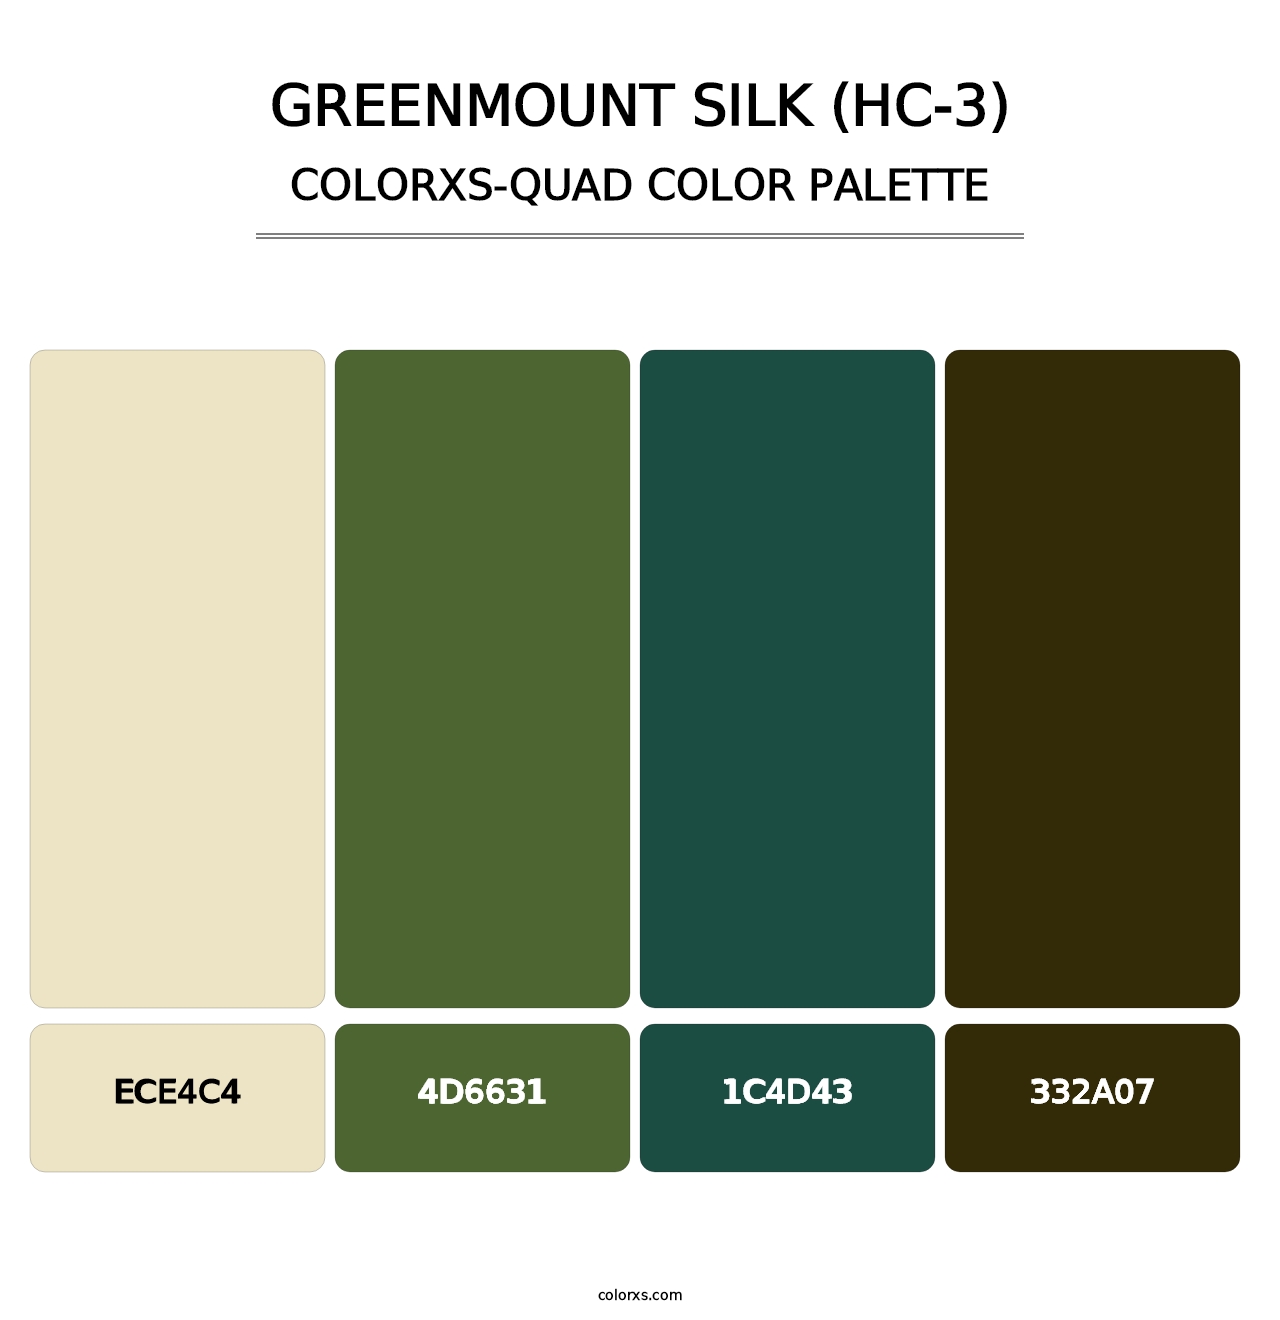 Greenmount Silk (HC-3) - Colorxs Quad Palette